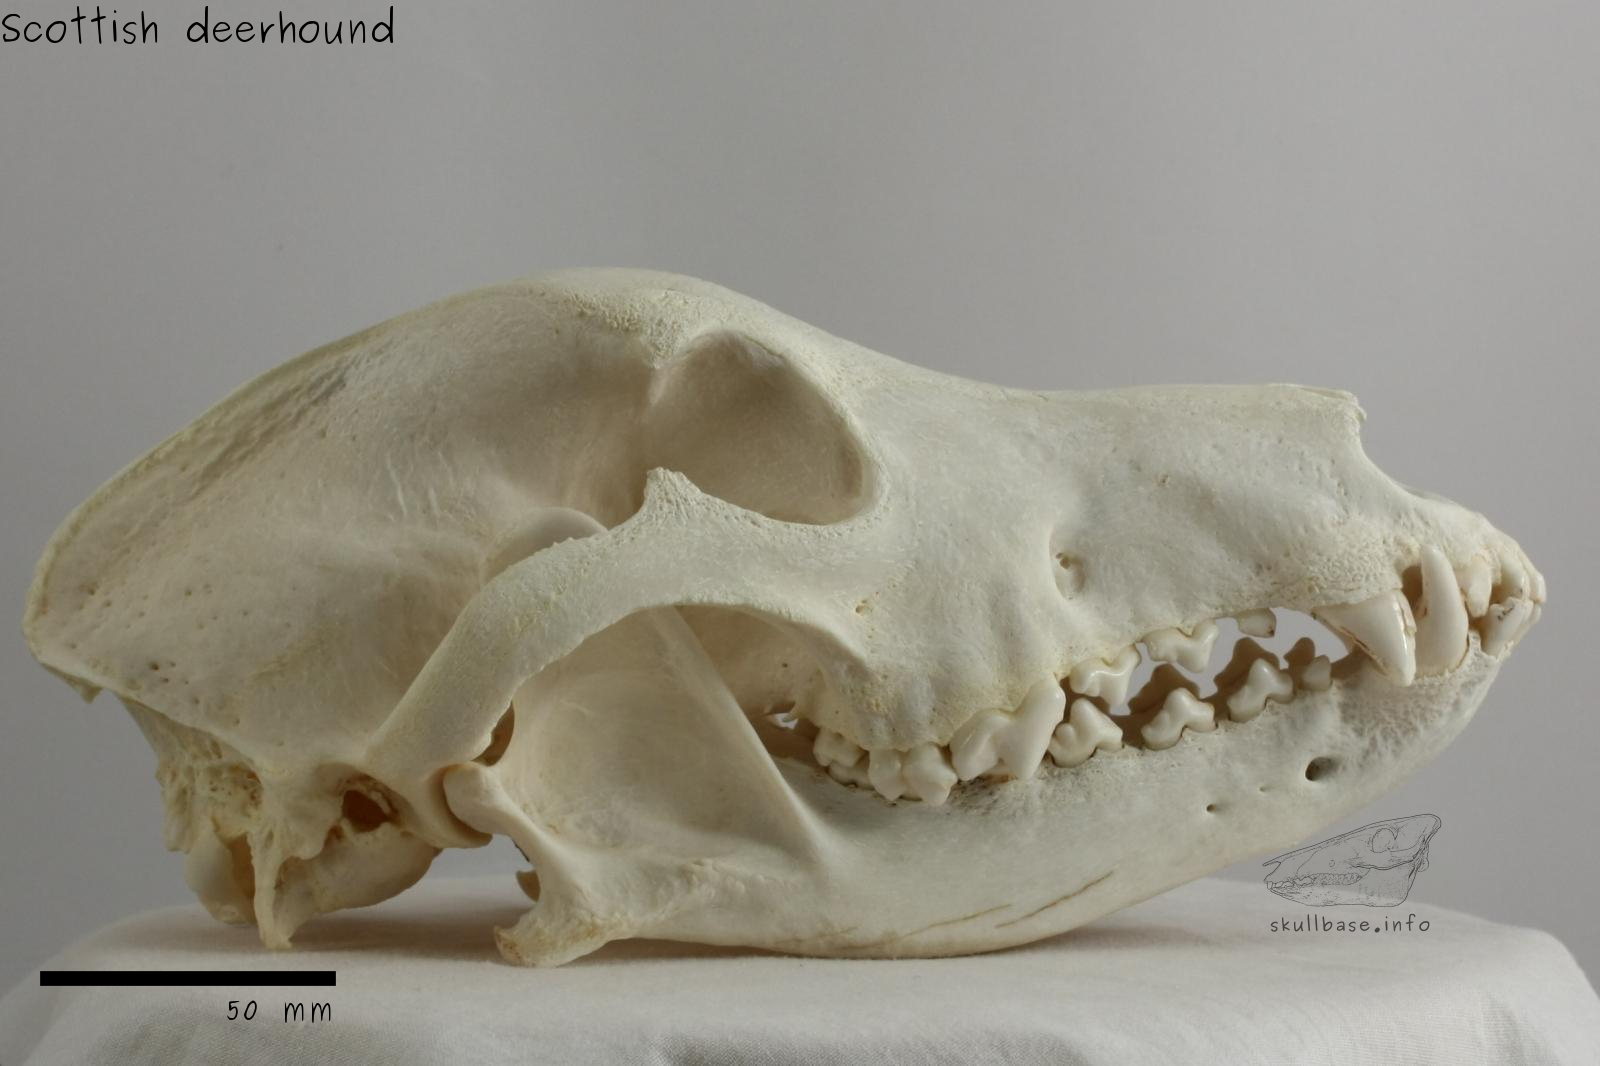 Scottish deerhound (Canis lupus familiaris) skull lateral view